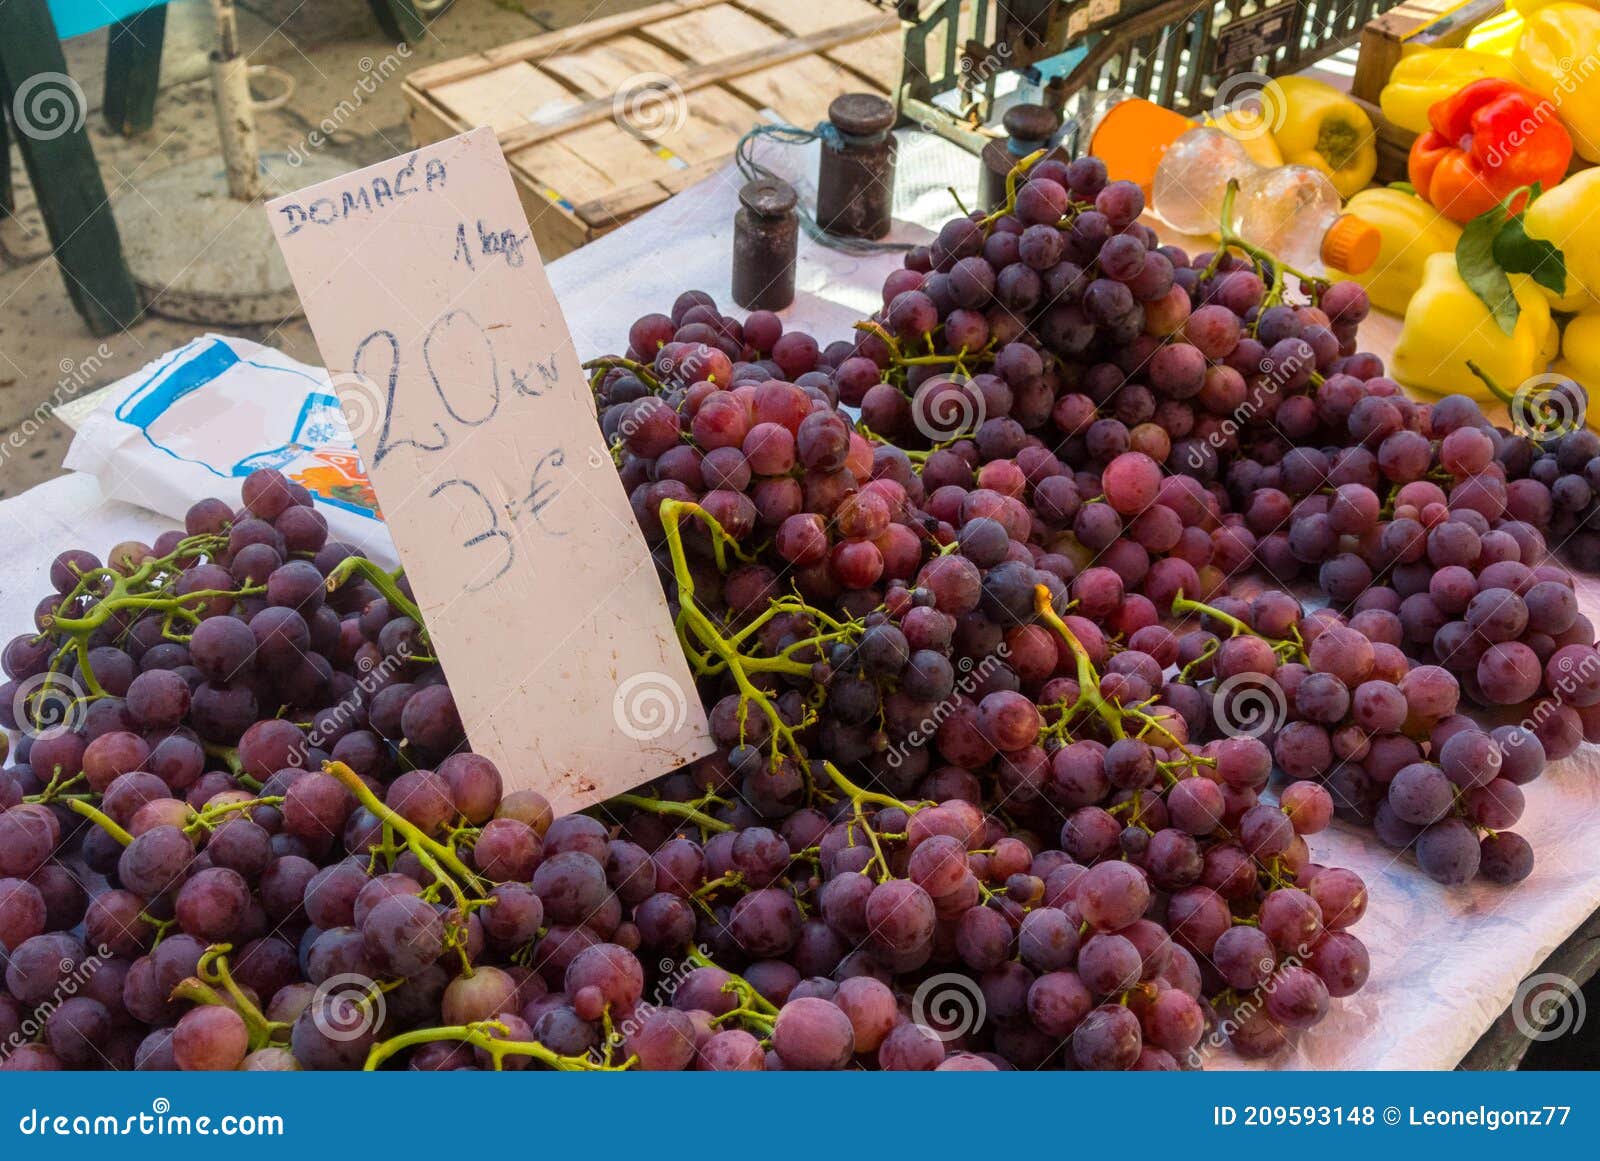 grapes in dubrovnik city market